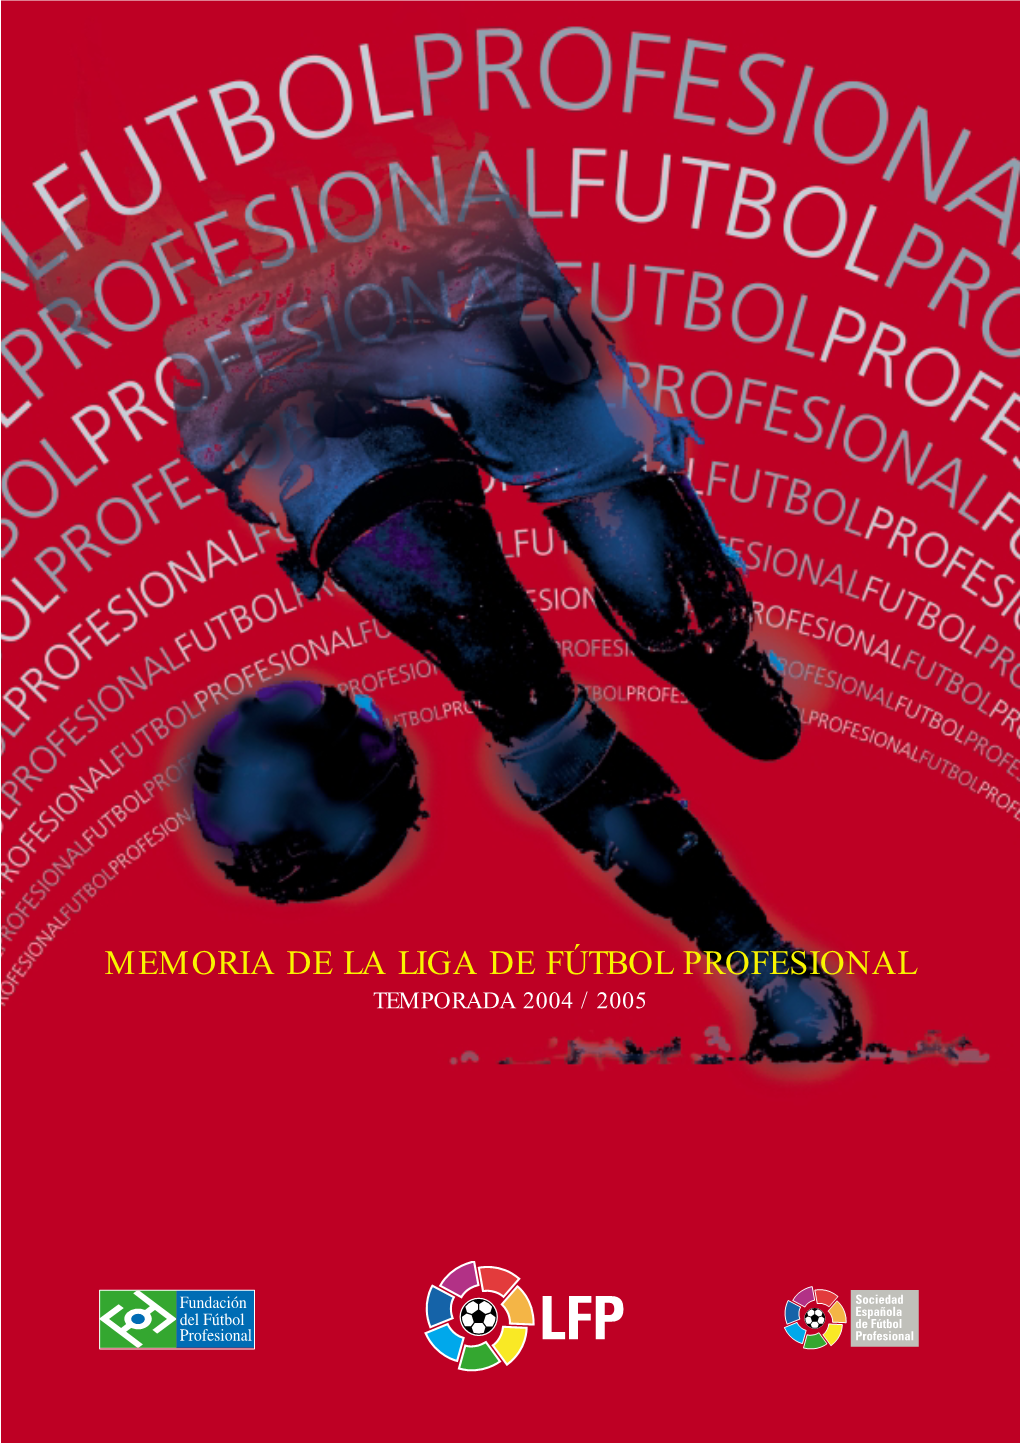 MEMORIA DE LA LIGA DE FÚTBOL PROFESIONAL TEMPORADA 2004 / 2005 1 Memoria Temporada 2004 / 2005